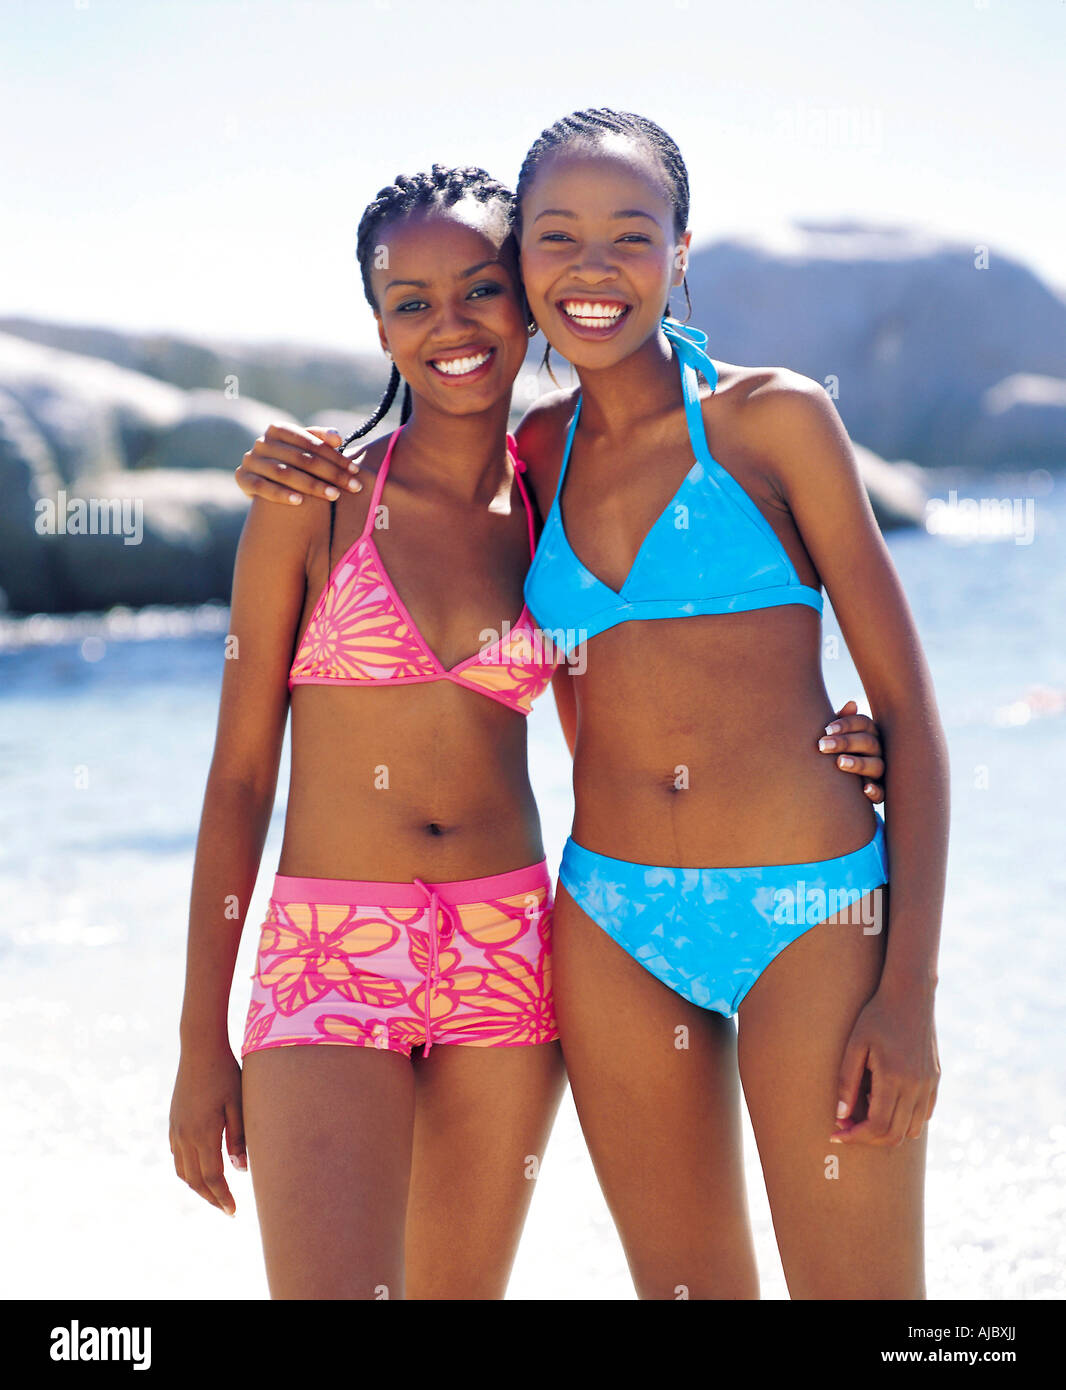 Two African Woman on the Beach in Bikinis Stock Photo